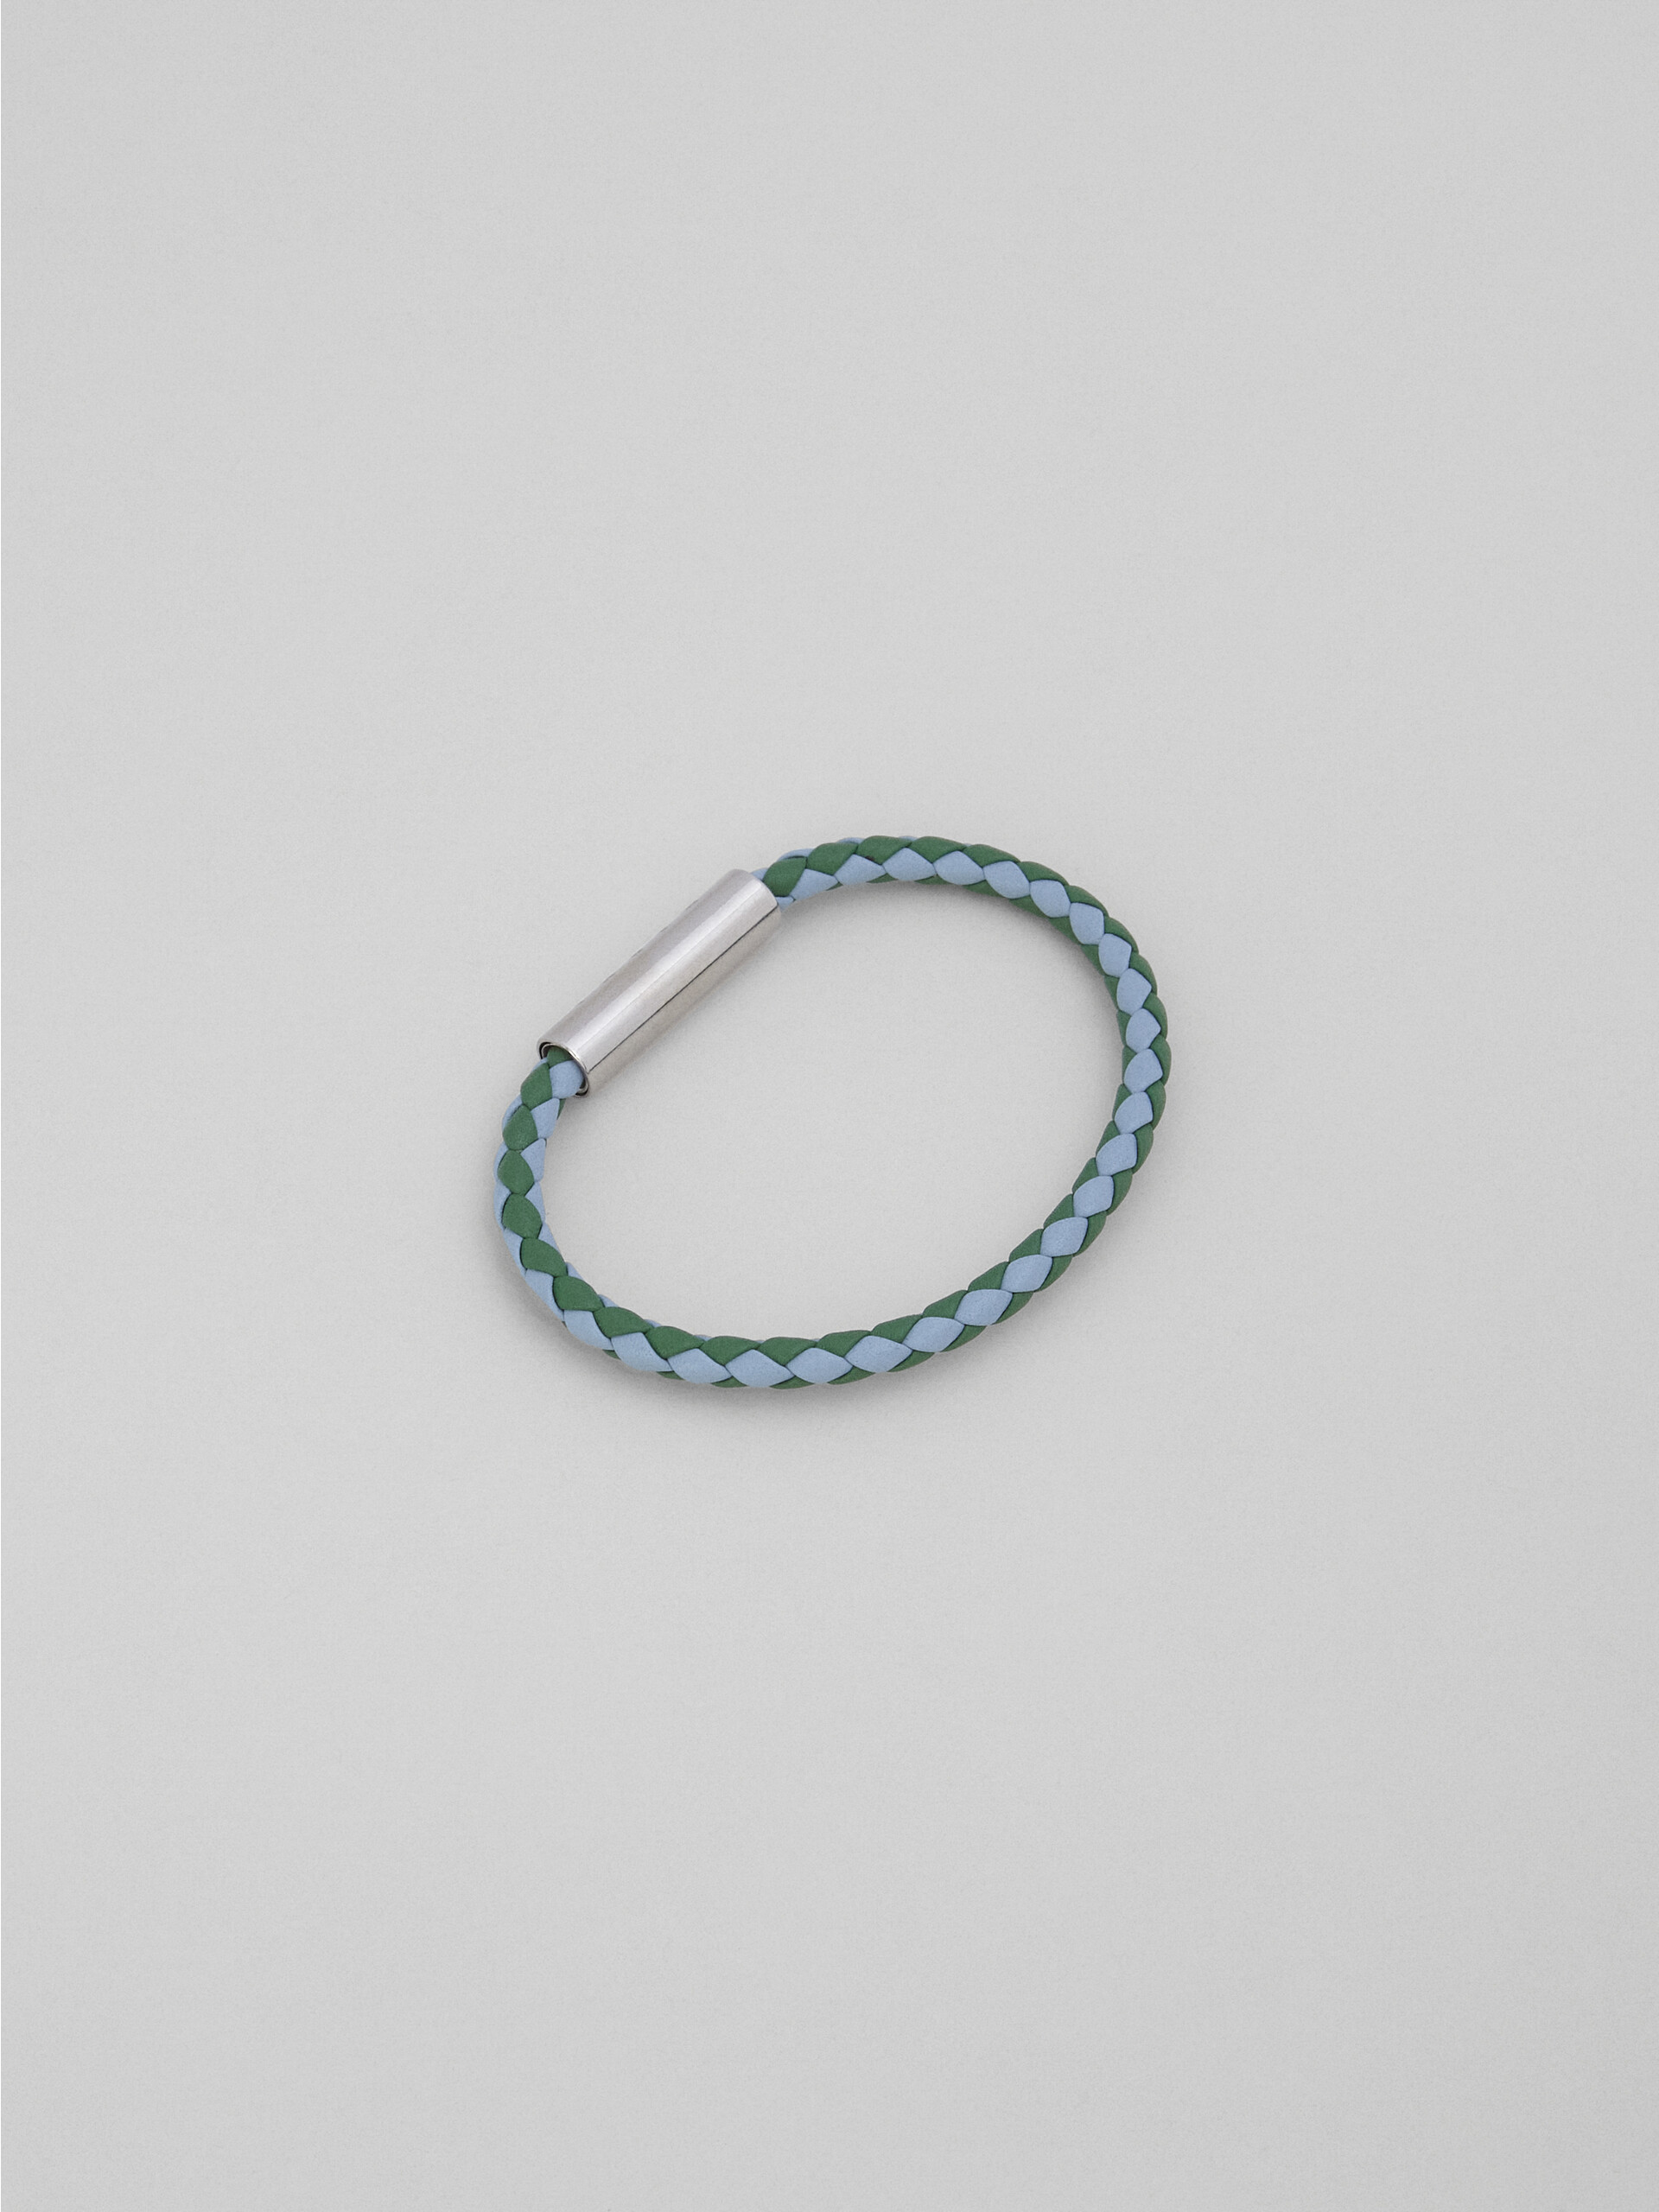 Grünes und hellblaues geflochtenes Lederarmband - Armbänder - Image 3